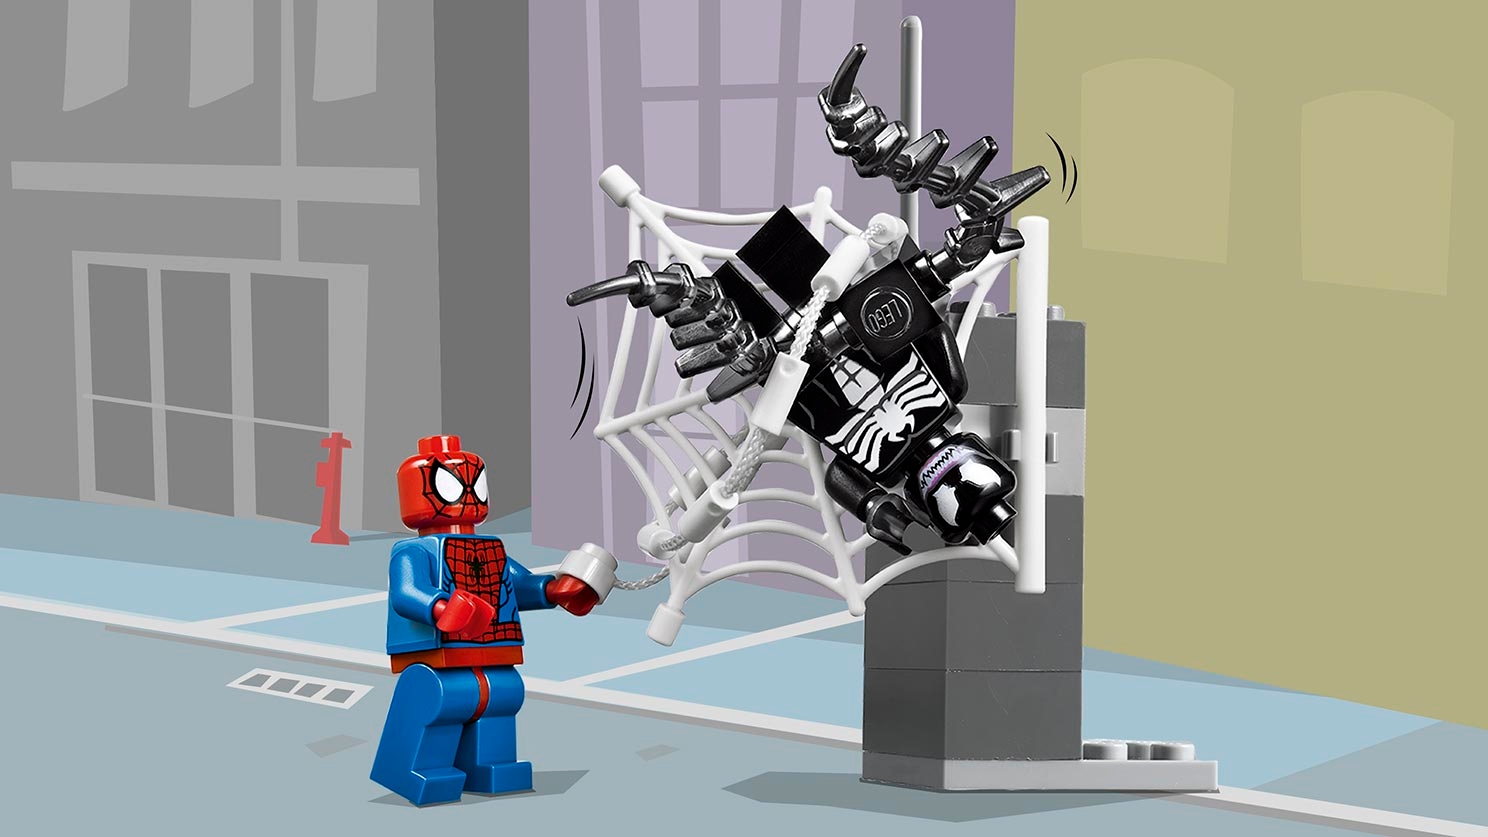 LEGO Spider-Man Juniors Spider-Man: Spider-Car Pursuit Set 10665 - US